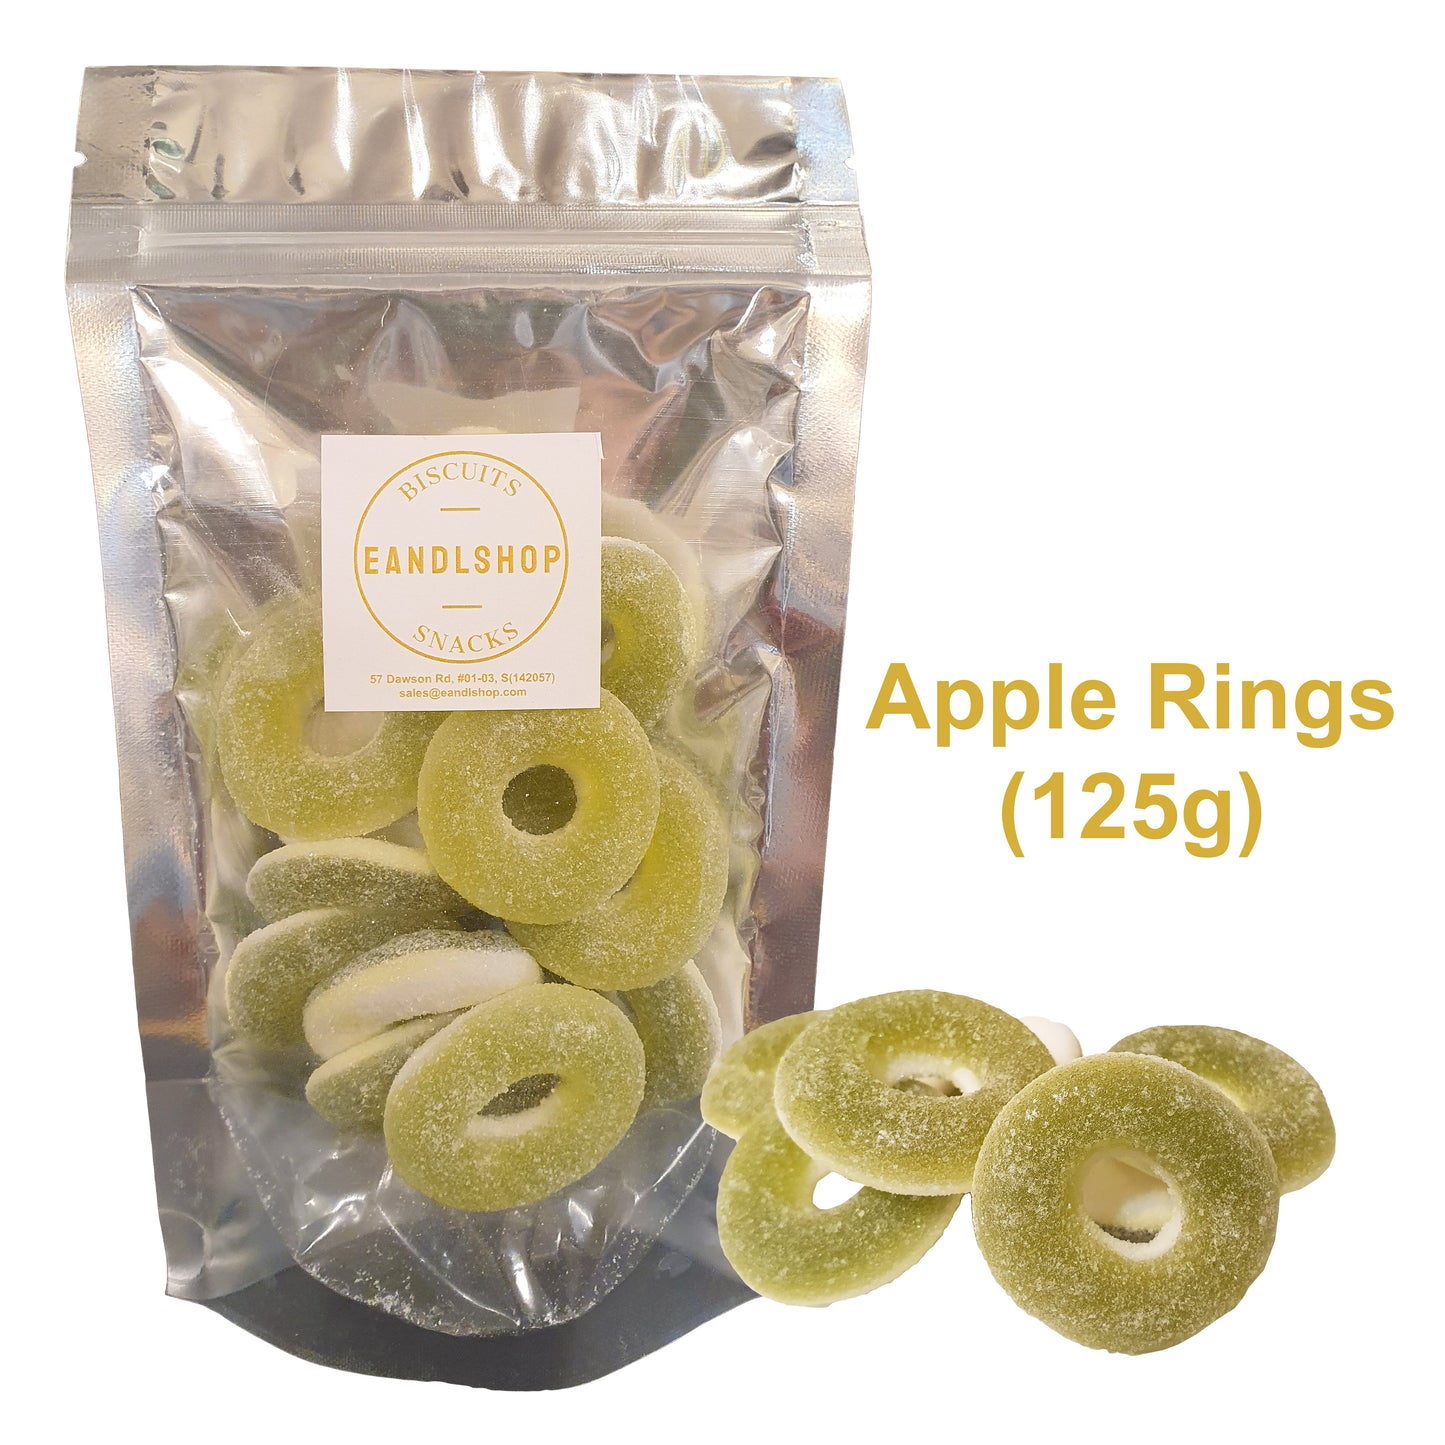 Haribo apple rings. Old-school biscuits, modern snacks (chips, crackers), cakes, gummies, plums, dried fruits, nuts, herbal tea – available at www.EANDLSHOP.com